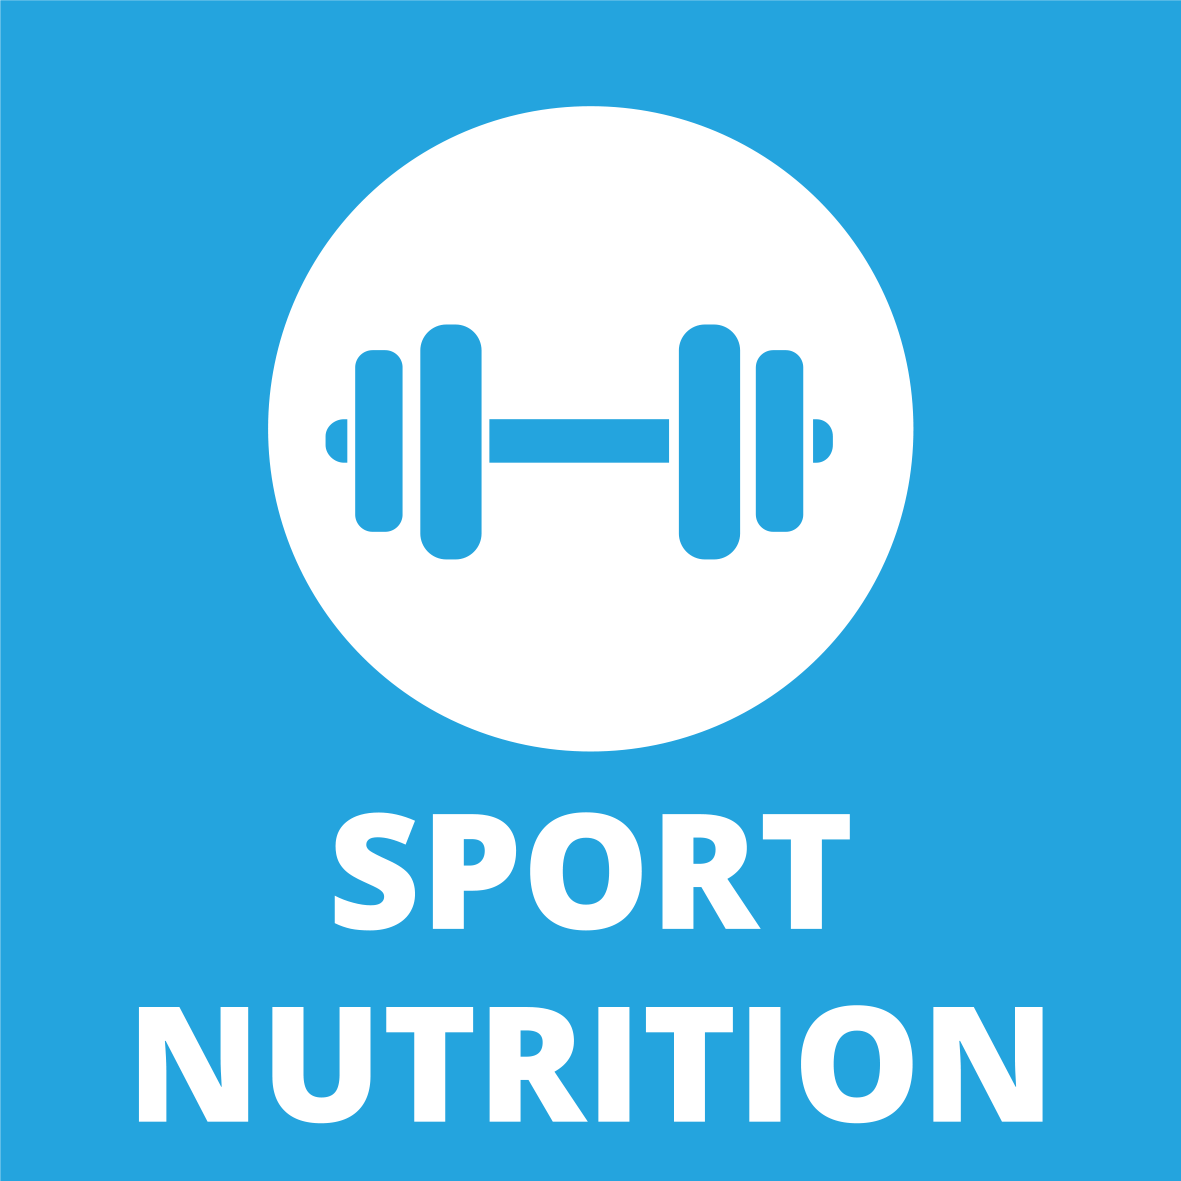 Sport nutrition